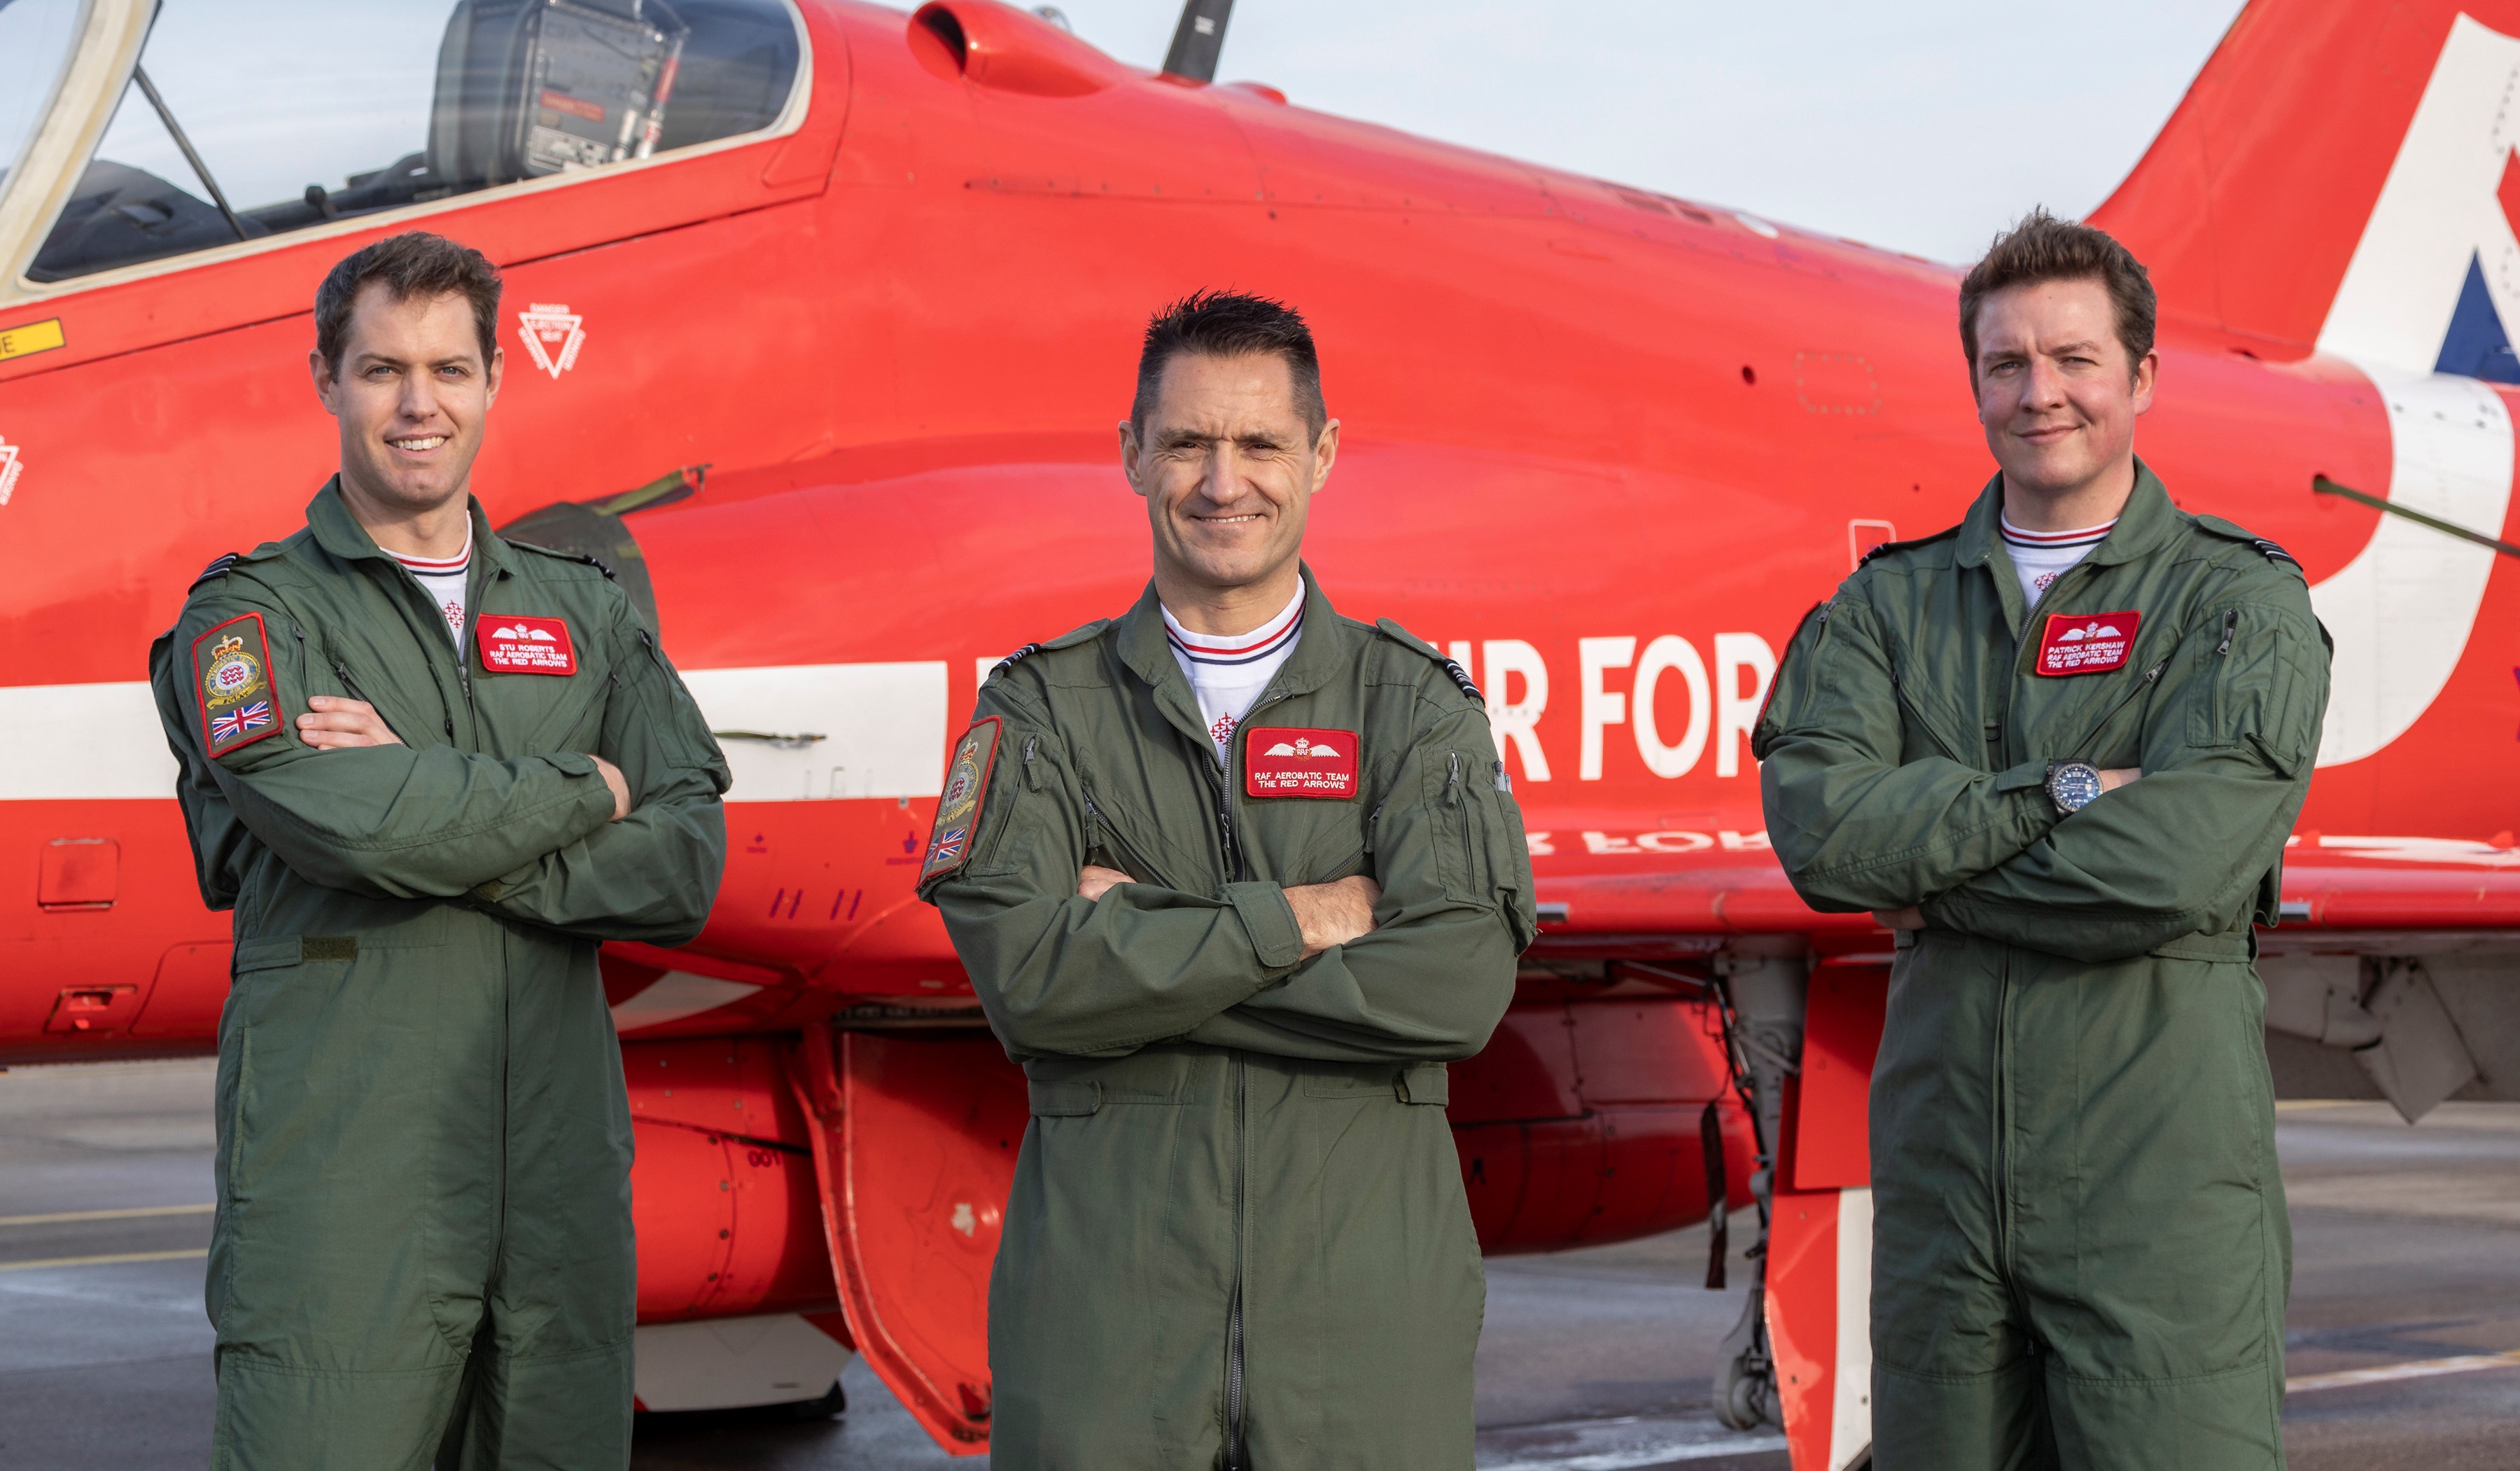 New Red Arrows pilots for 2022: (Left-to-right) Flight Lieutenant Stuart Roberts, Squadron Leader Graeme Muscat and Flight Lieutenant Patrick Kershaw.